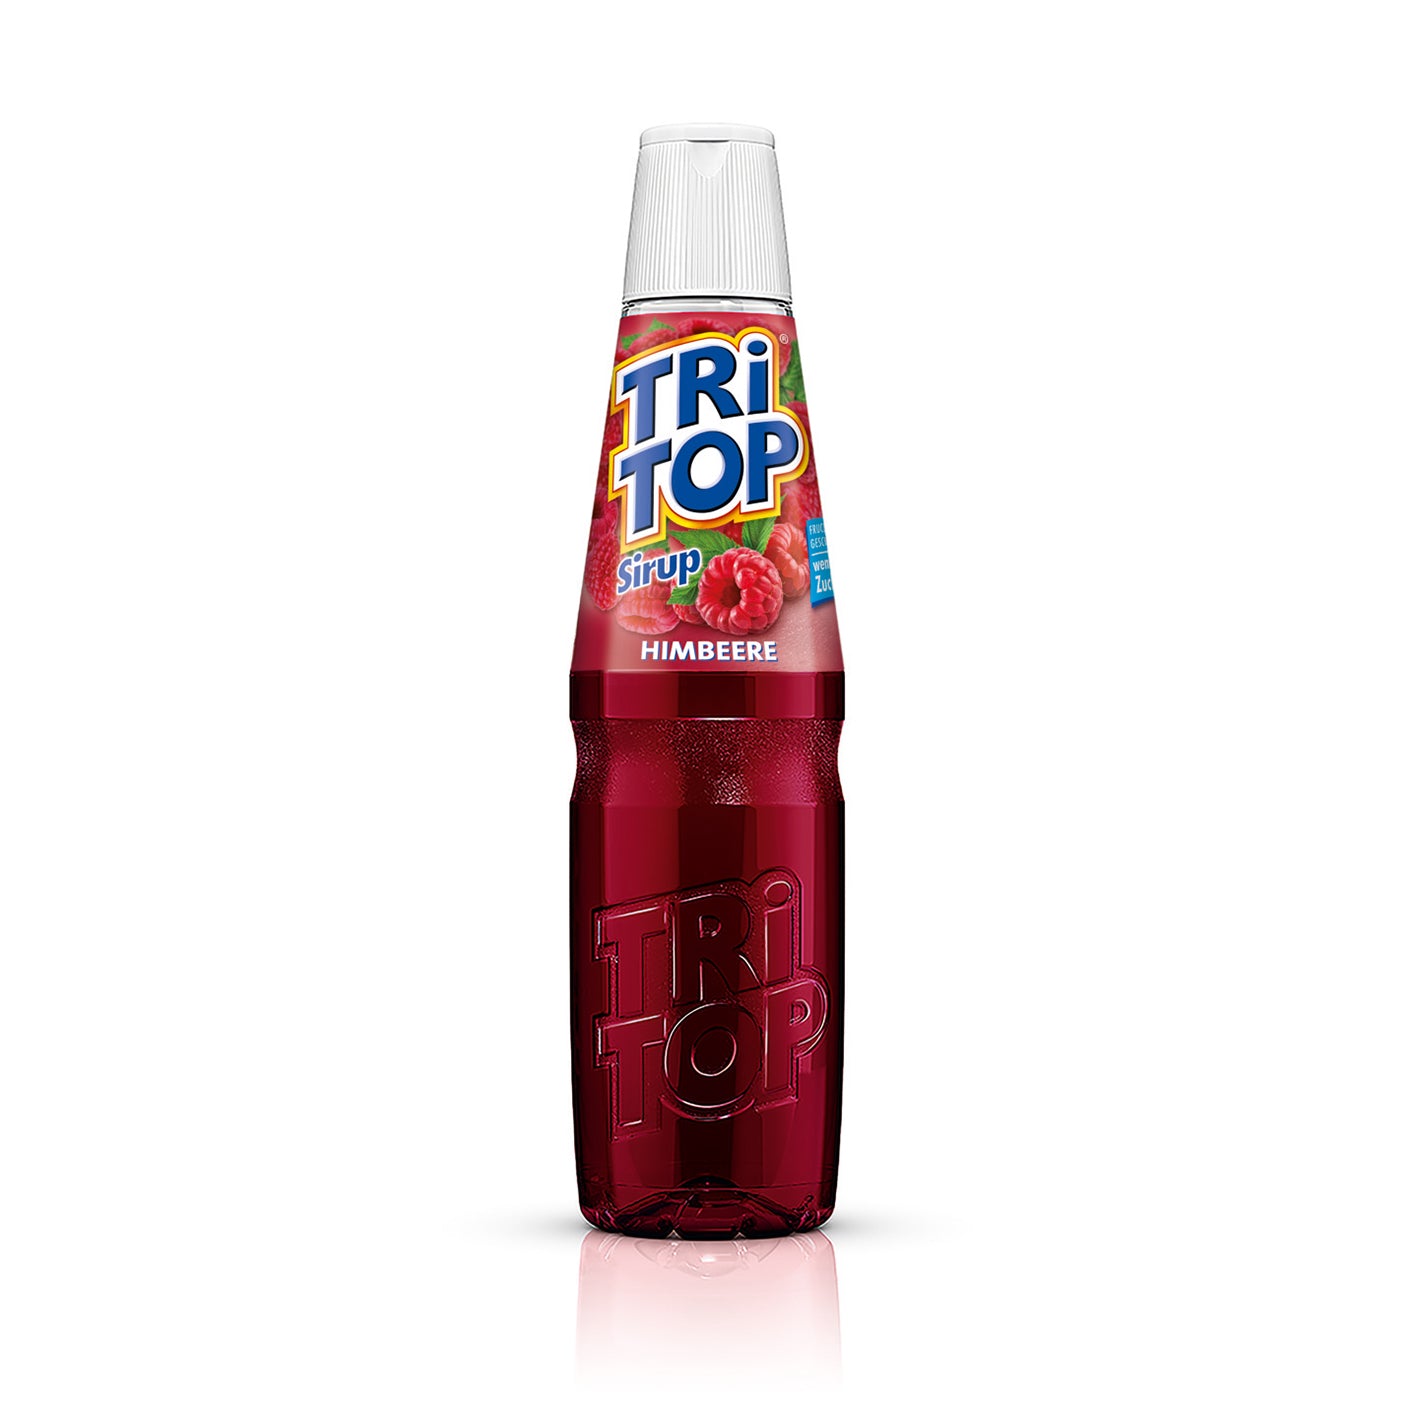 TRi TOP Sirup Himbeere - 600 ml